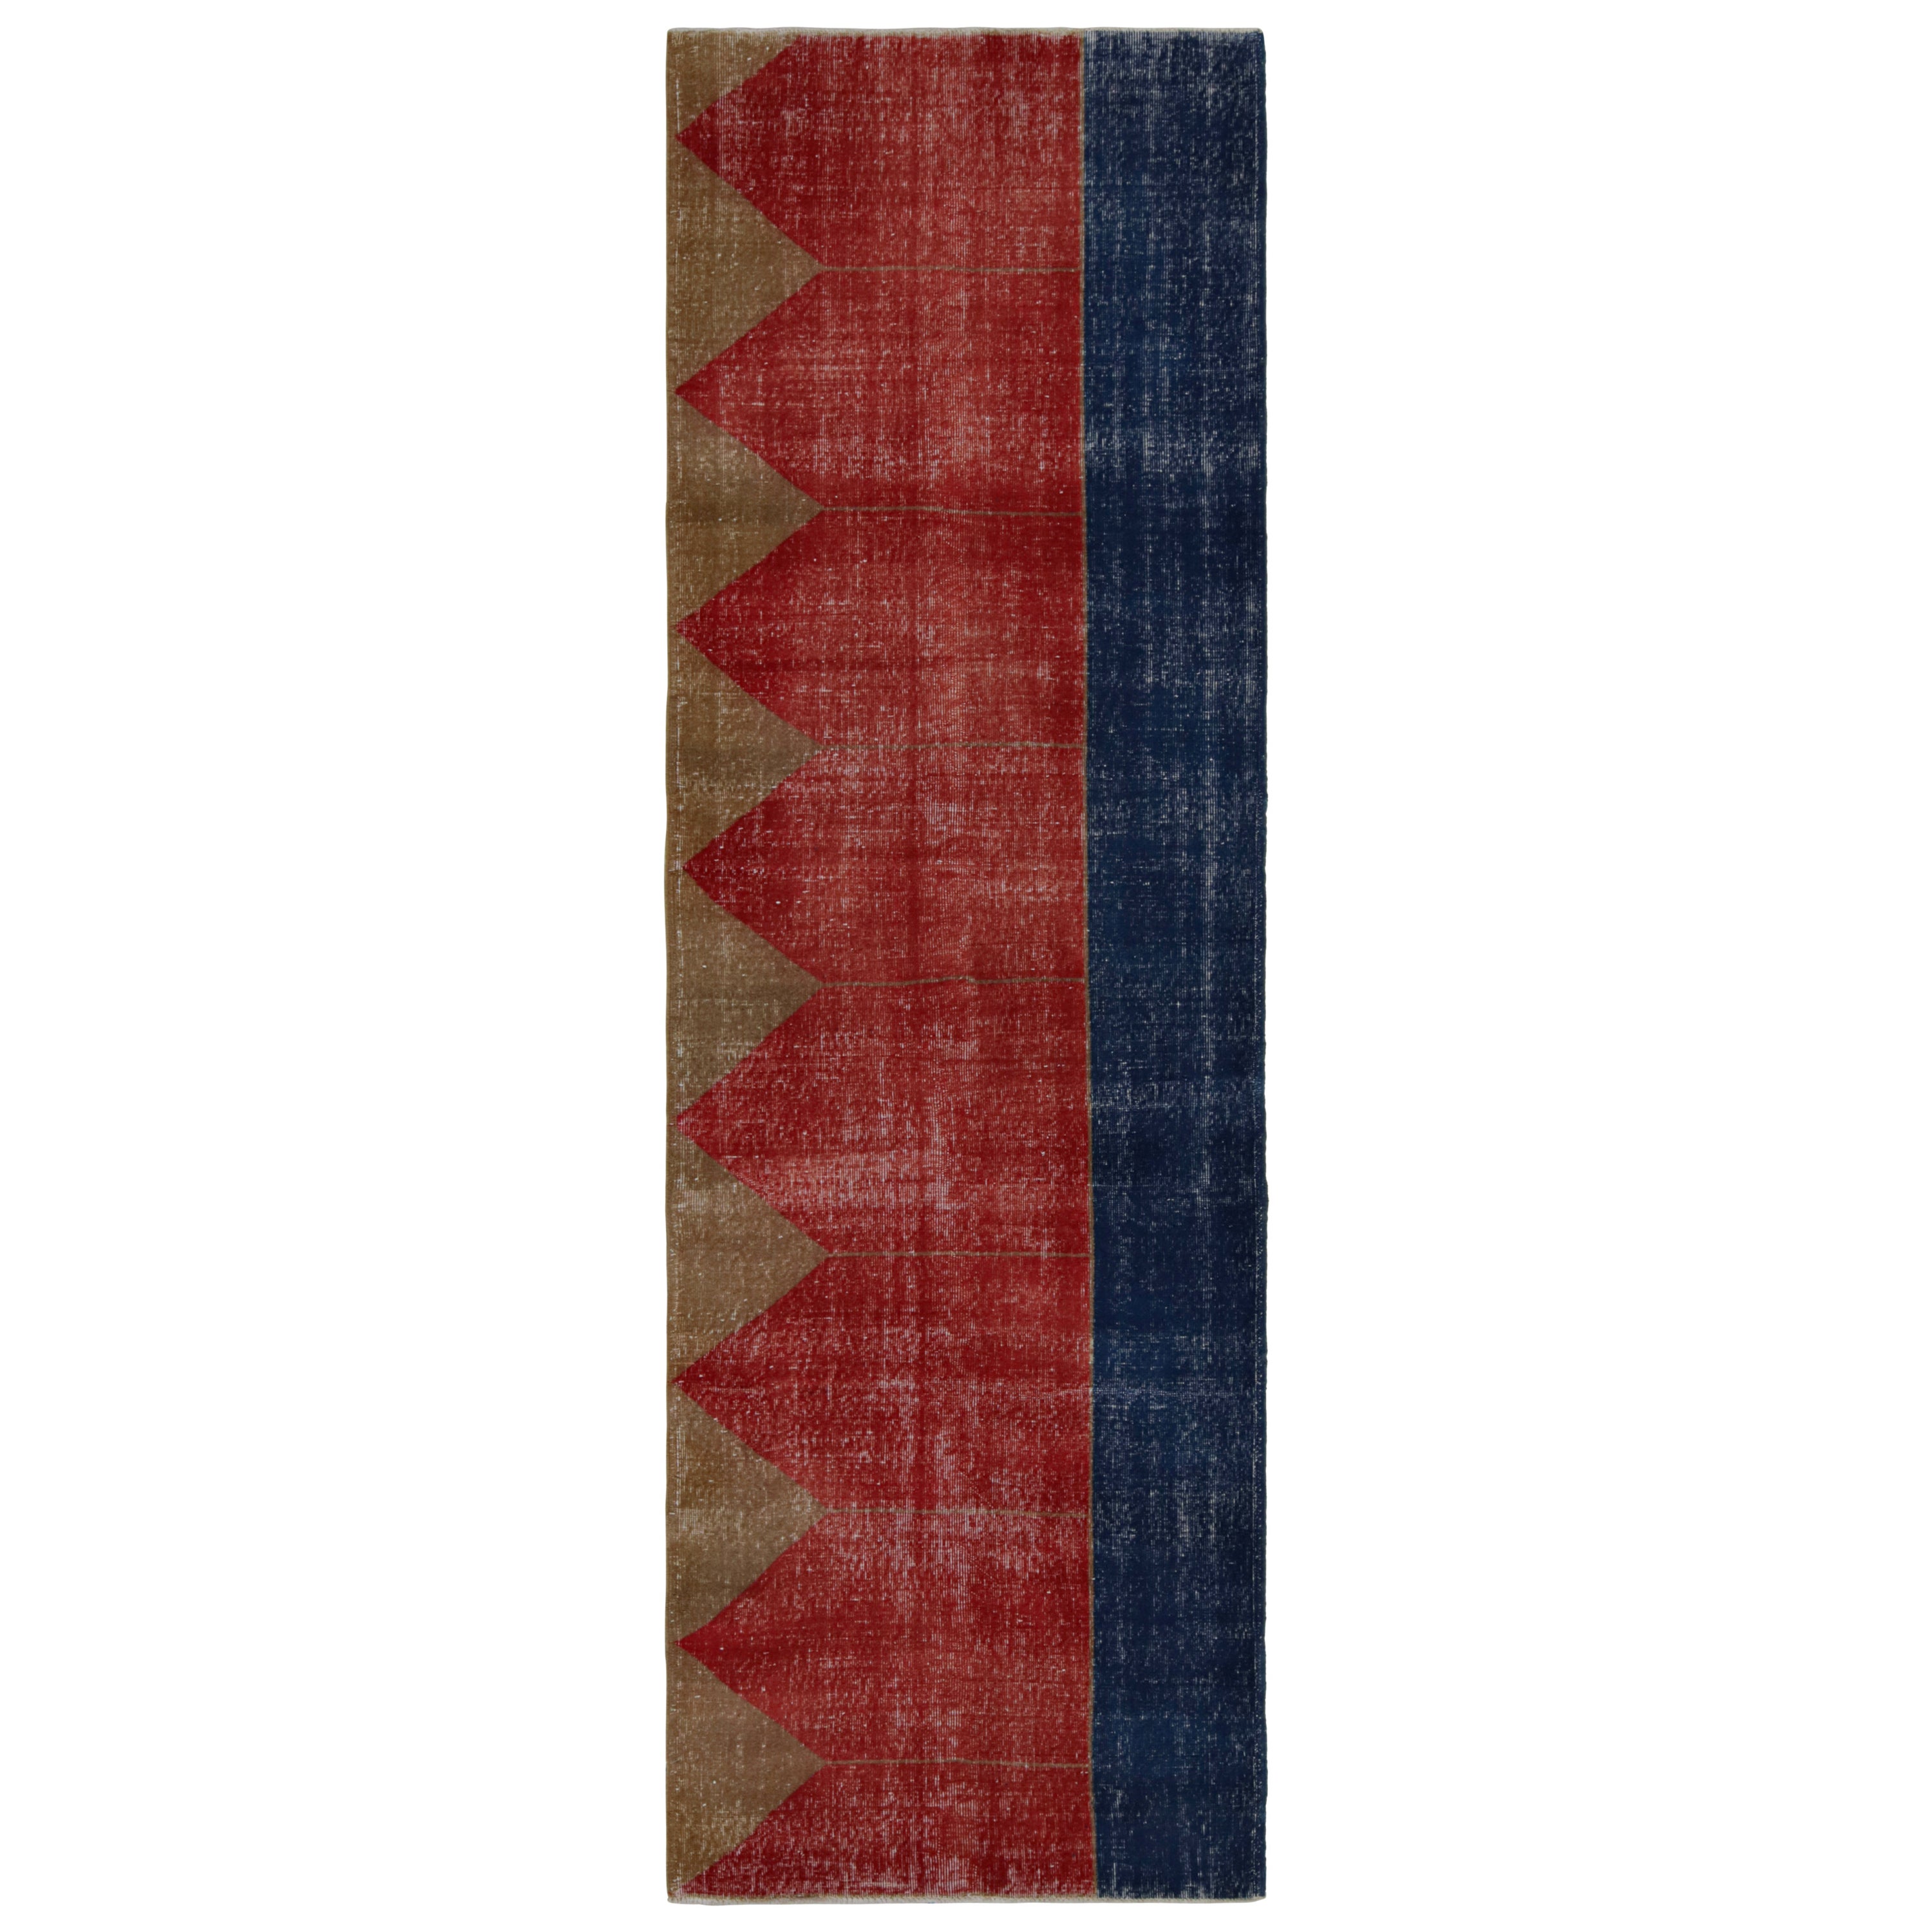  Vintage Turkish runner rug in Red, Blue and Brown Patterns by Rug & Kilim For Sale